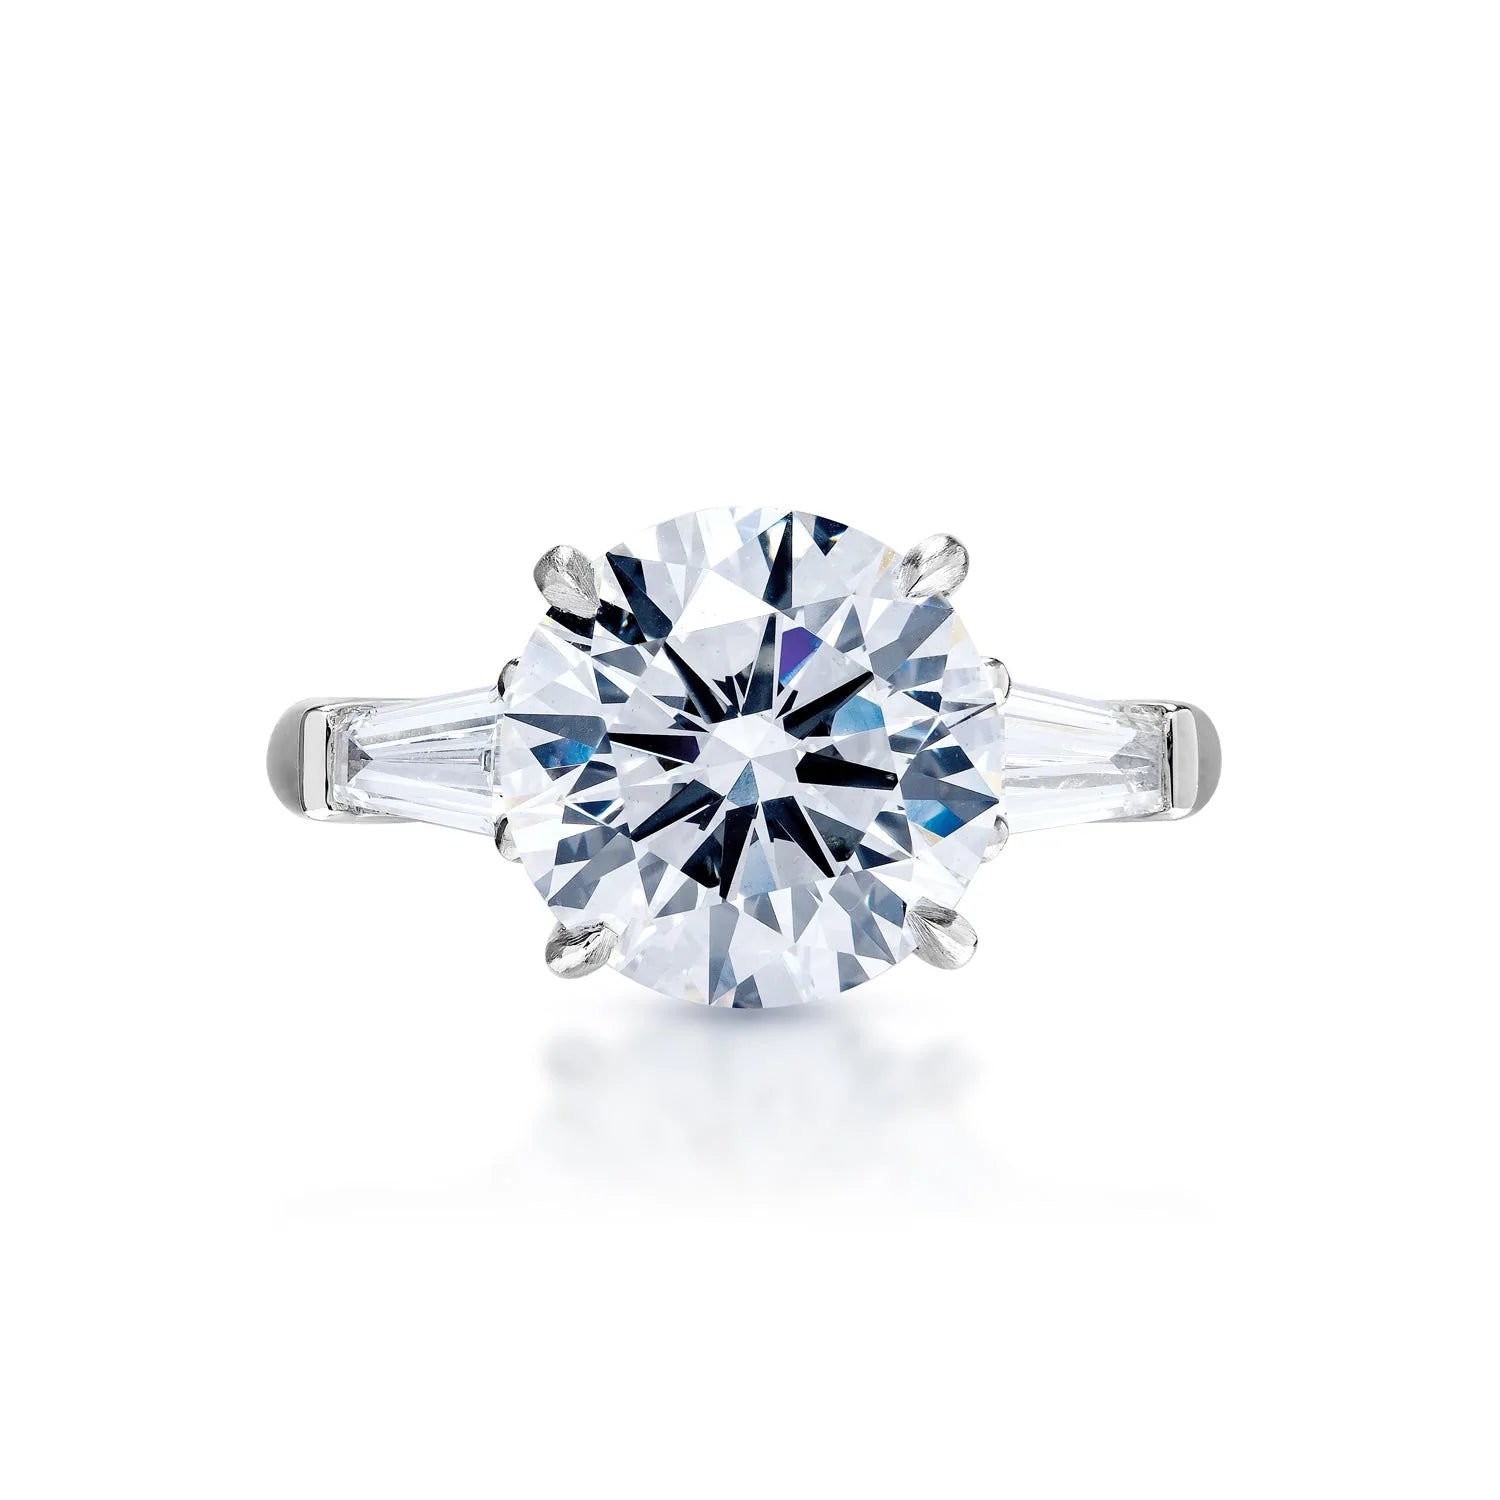 Lux 4 Carat G VS1 Round Brilliant Lab Grown Diamond Engagement Ring in Platinum Front View'